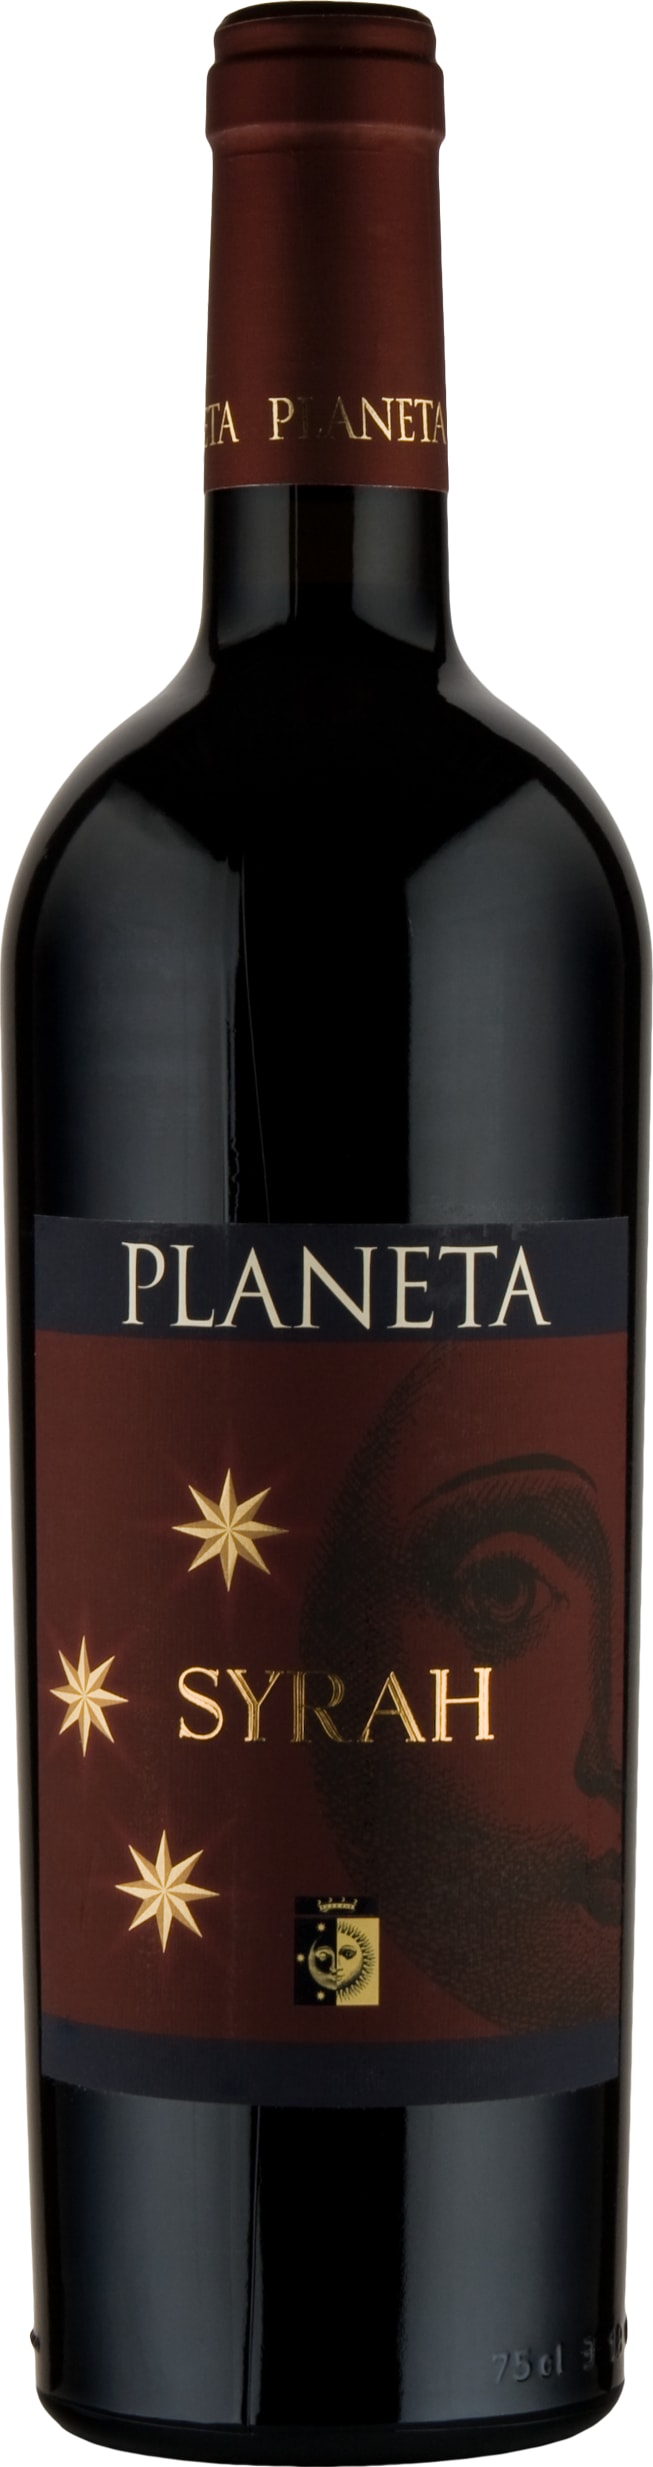 Syrah Maroccoli 19 Planeta 75cl - Buy Planeta Wines from GREAT WINES DIRECT wine shop